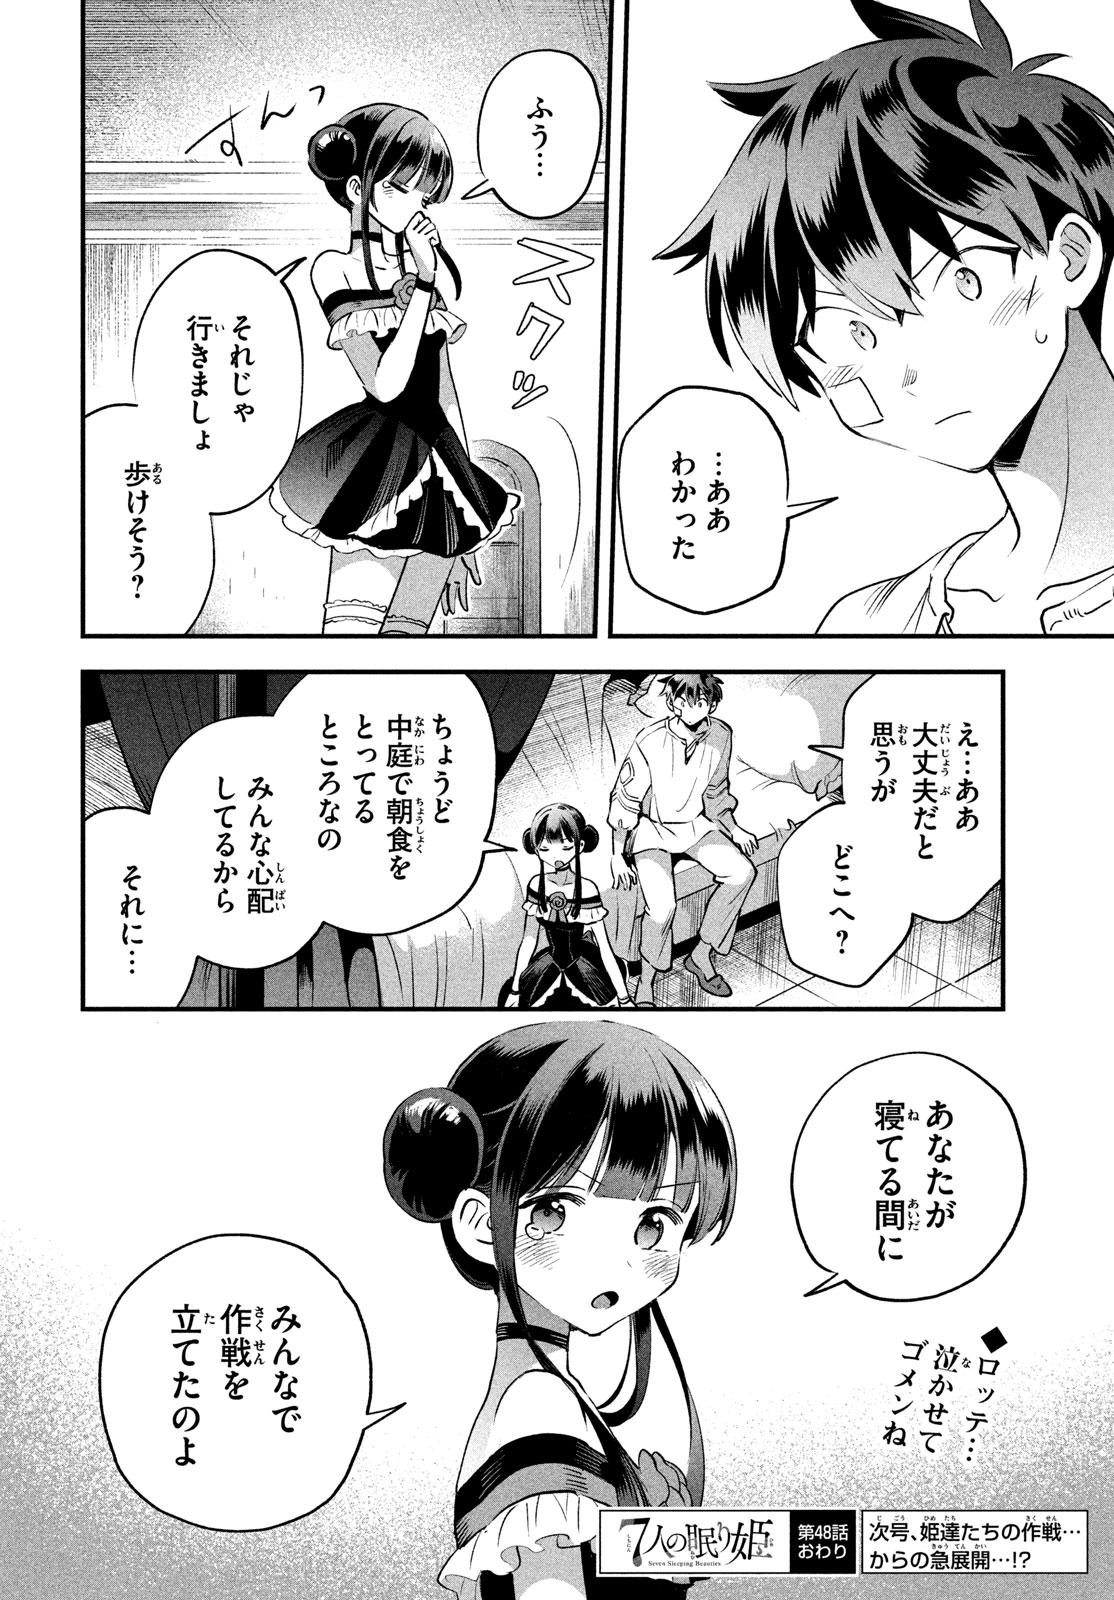 7-nin no Nemuri Hime - Chapter 48 - Page 14